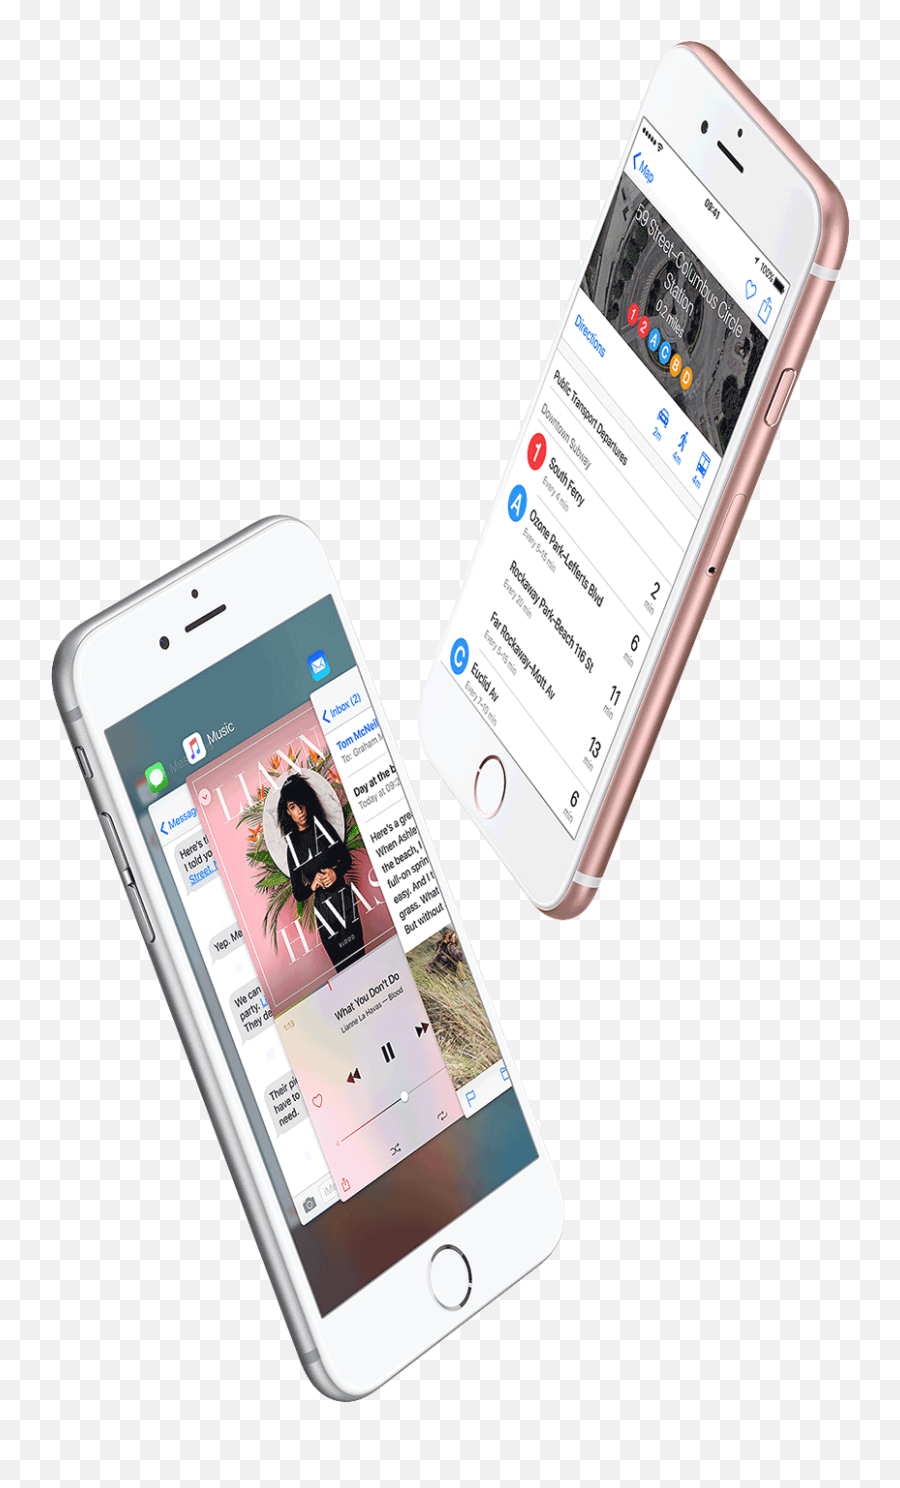 Introducing Apple Iphone 6s U0026 Iphone 6s Plus Bt Shop - Samsung